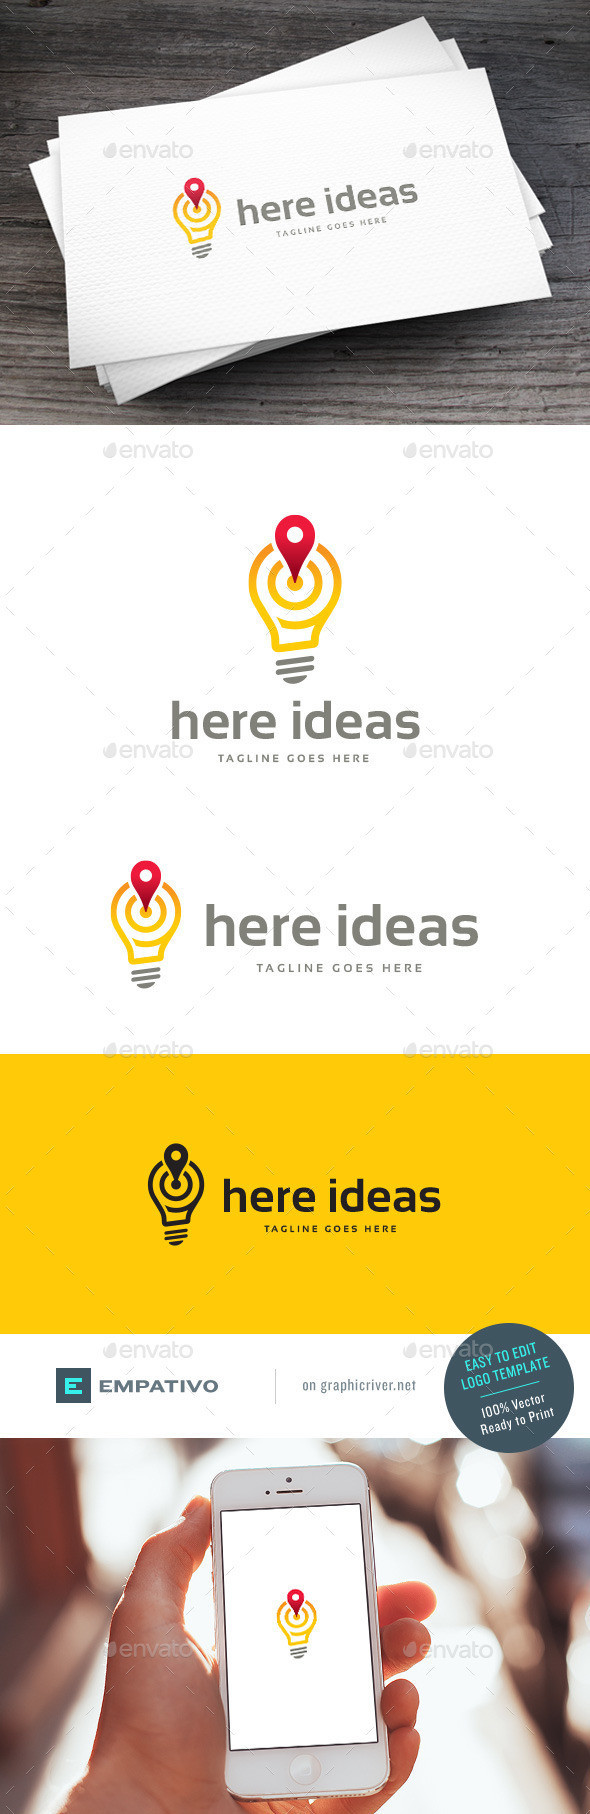 Here ideas logo template